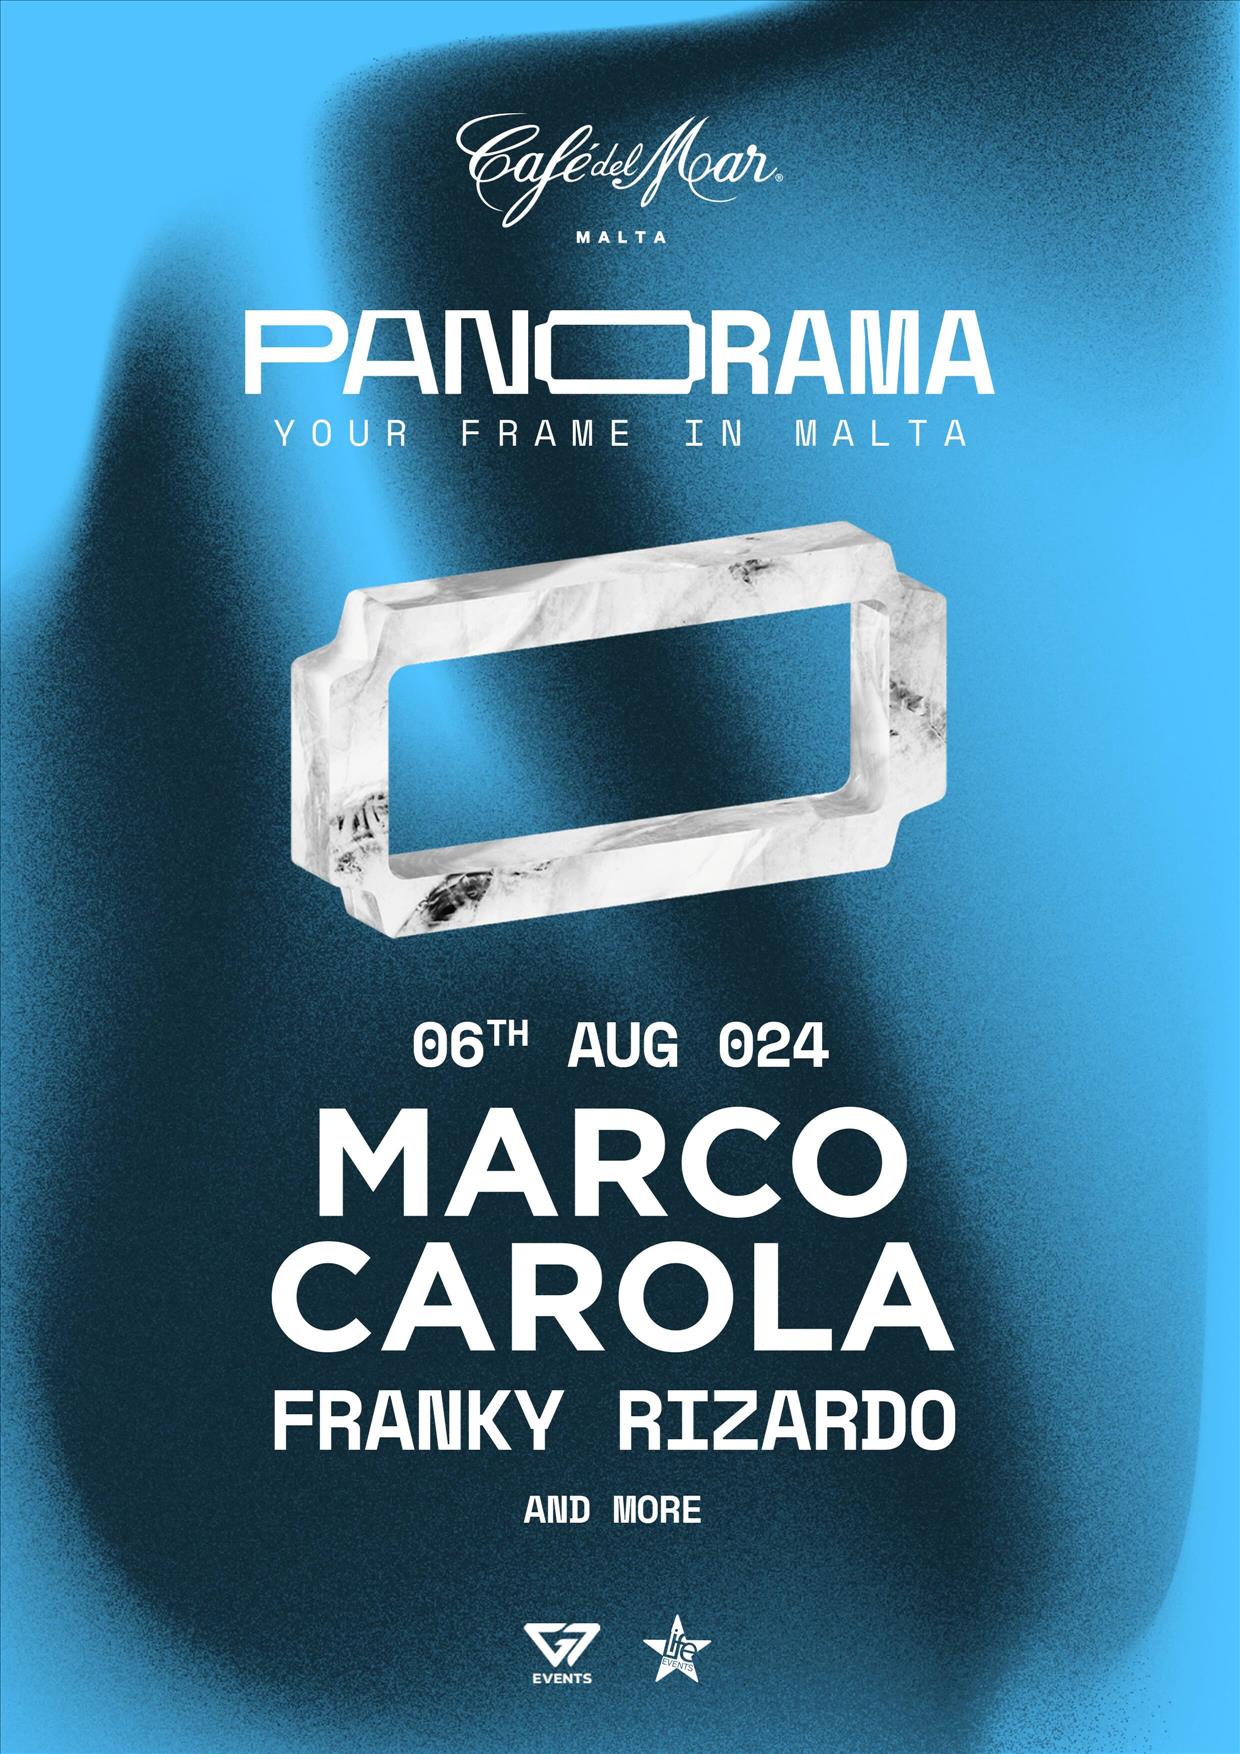 Panorama Malta presents Marco Carola at Café del Mar poster